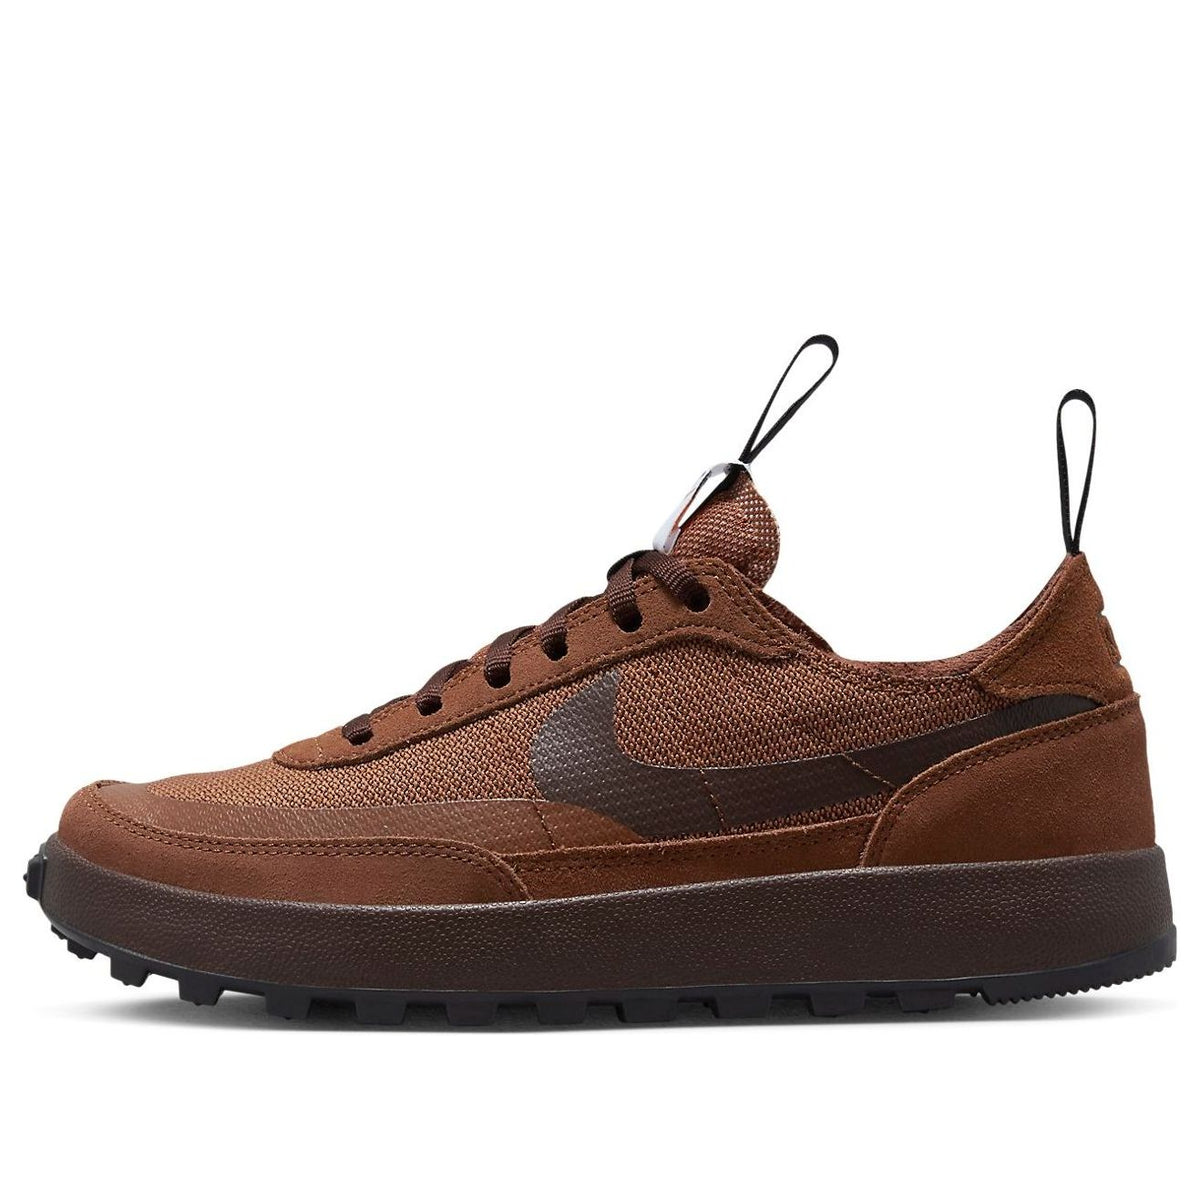 WMNS) Tom Sachs x NikeCraft General Purpose Shoe 'Brown' DA6672